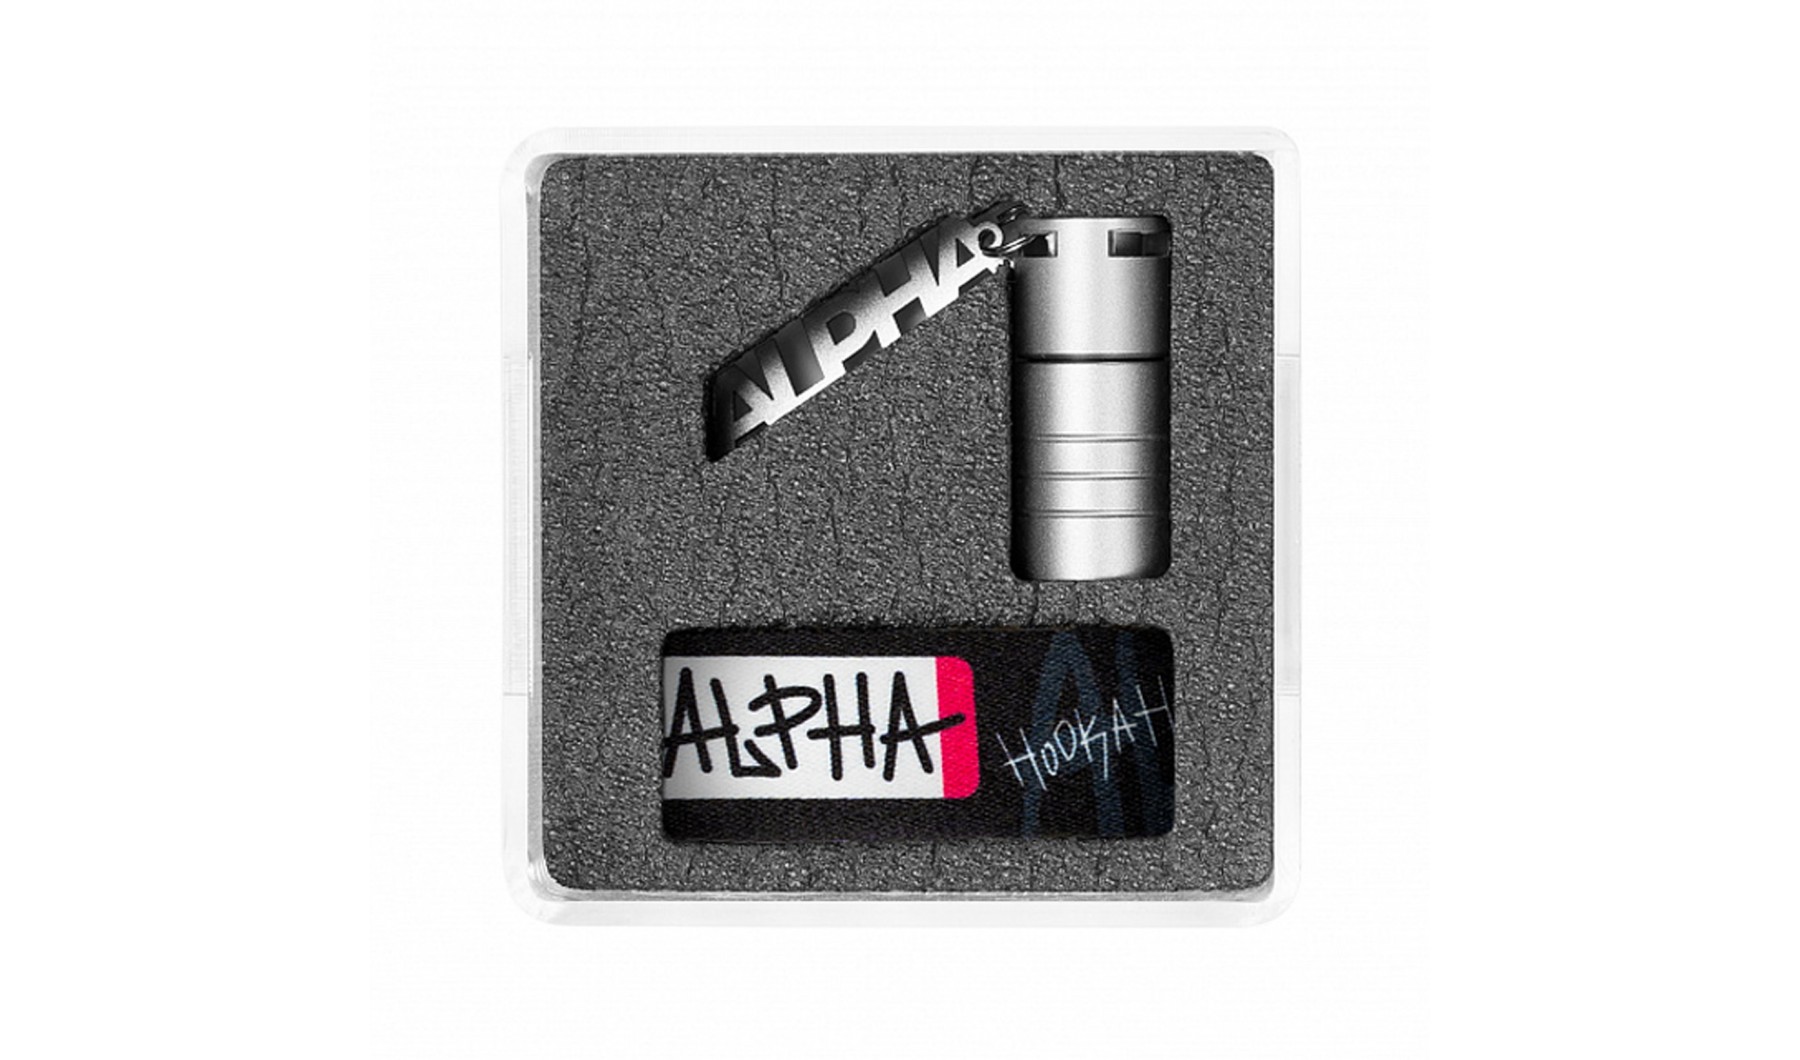 alpha-pipe-glass-box-x-vndl--3-1800x1060h